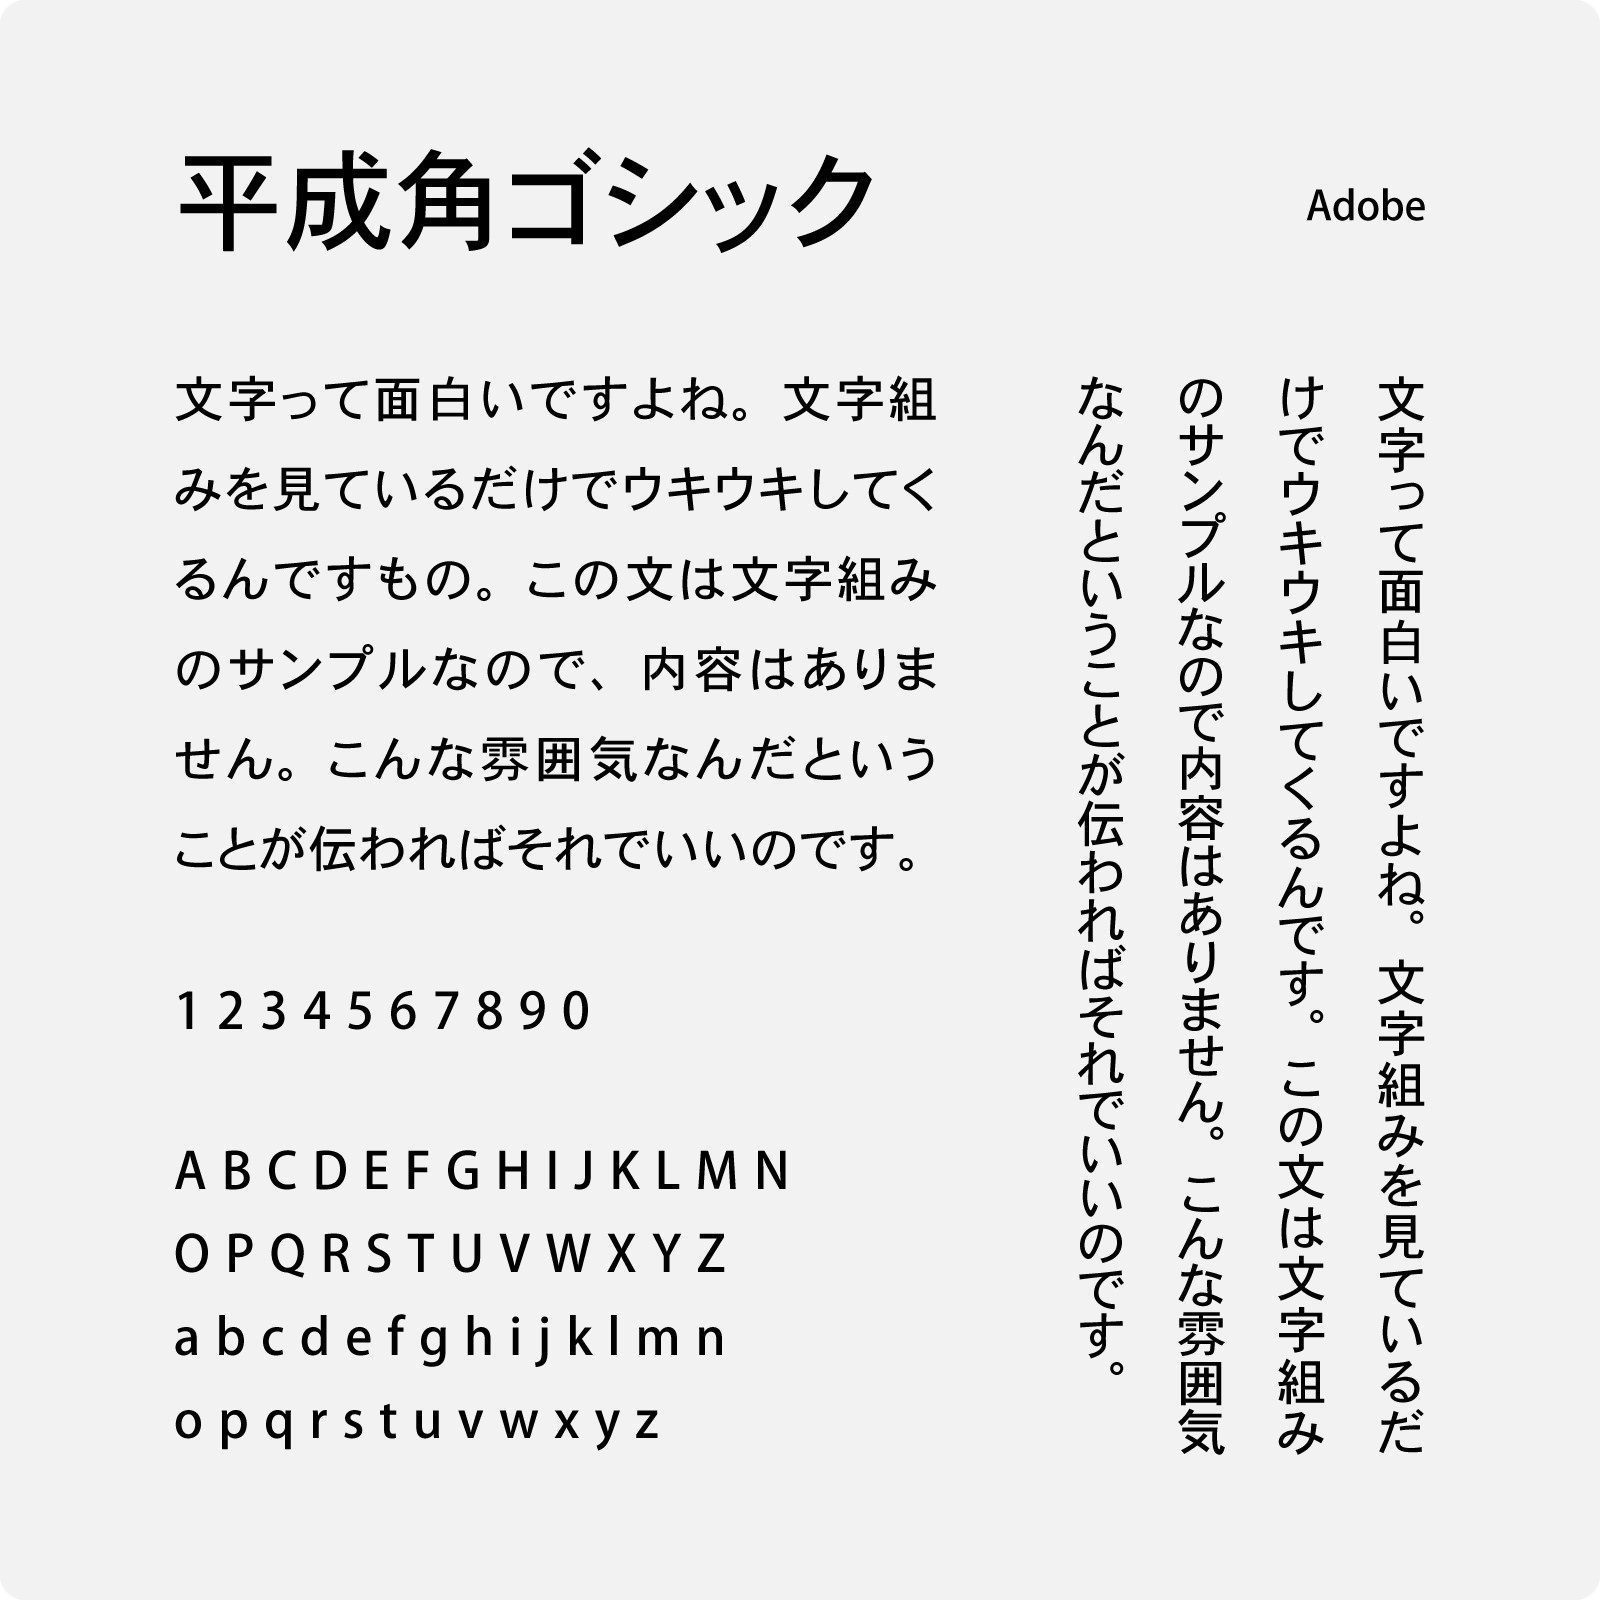 Adobe Fonts アドビフォント 日本語書体一覧 19年4月版 Sholopono